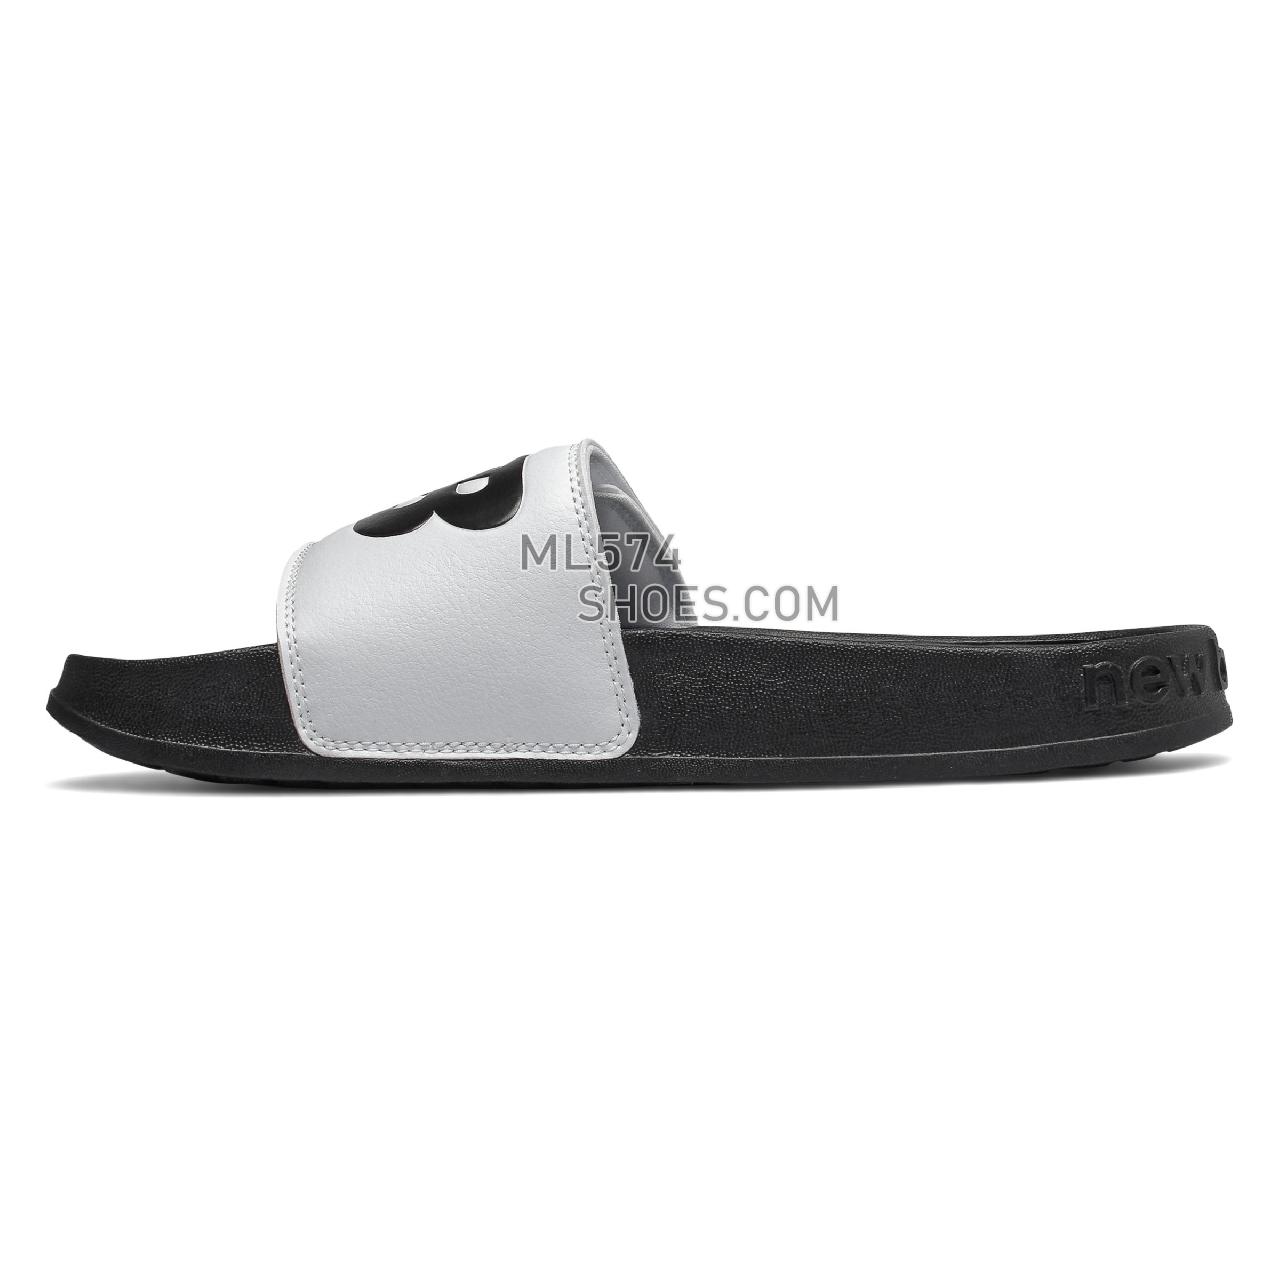 New Balance 200 Adjustable - Women's Flip Flops - White with Black - SWA200W1